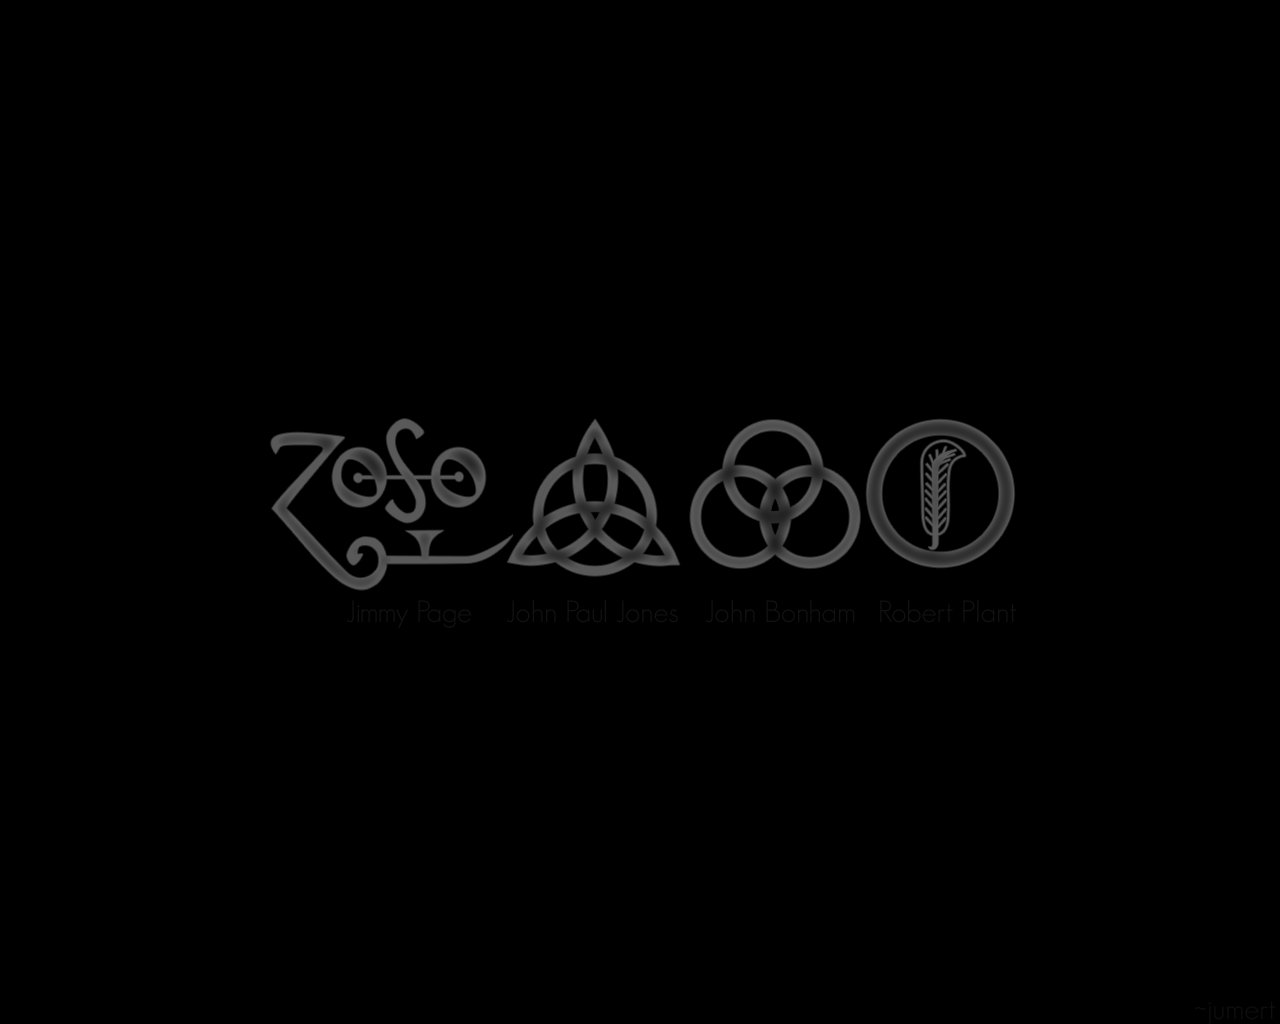 Led Zeppelin Wallpaper for Free Download, 37 Led Zeppelin 100